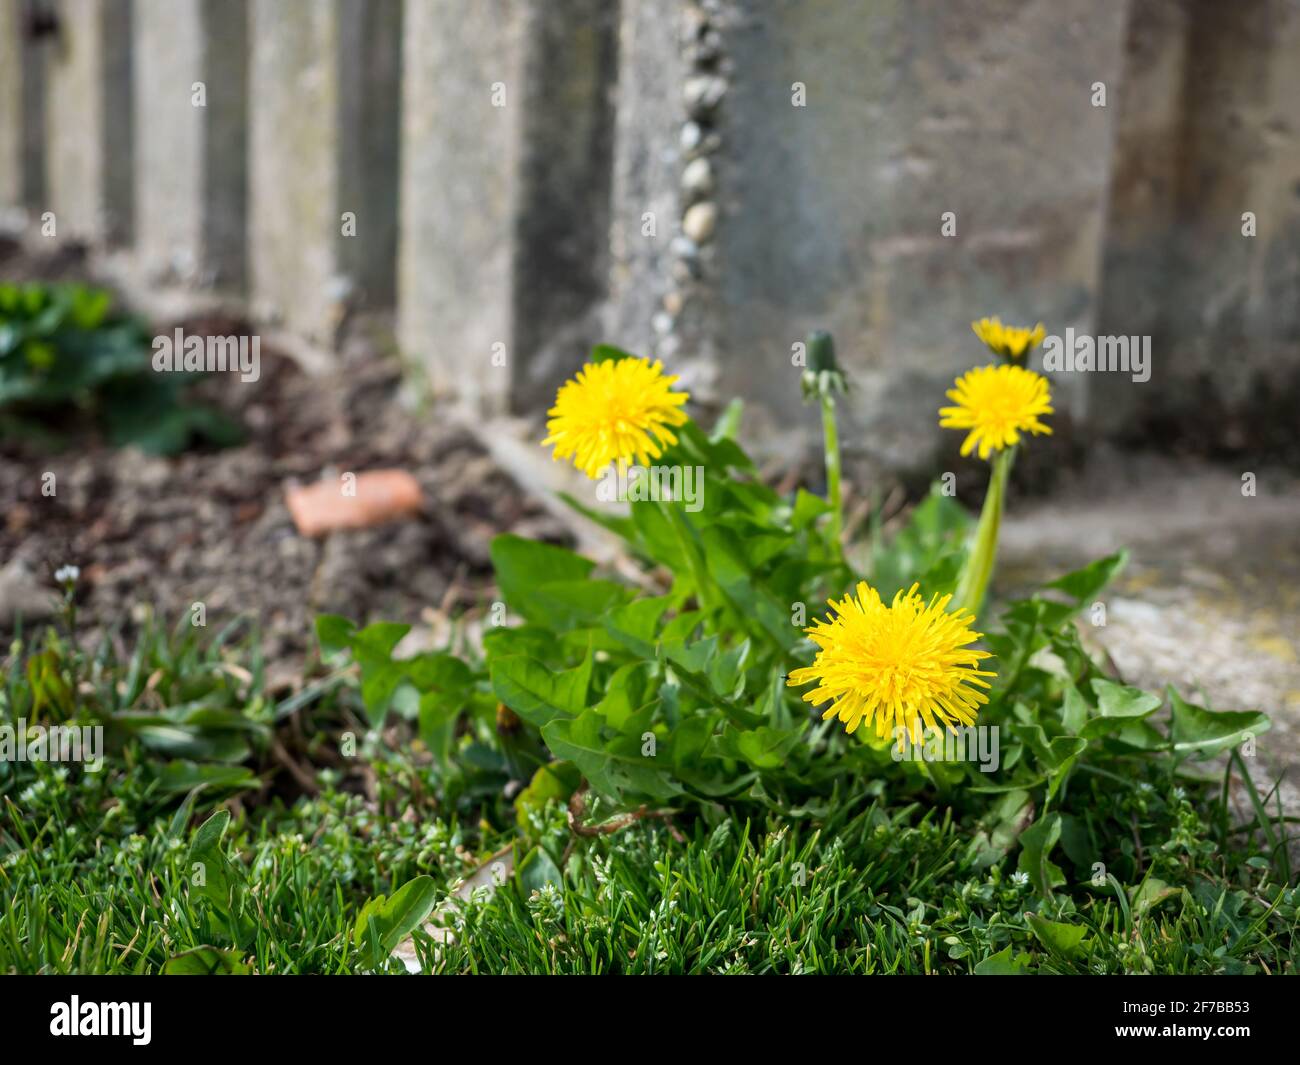 Fresh Dandelion growing next to a concrete wall in the garden Stock Photo